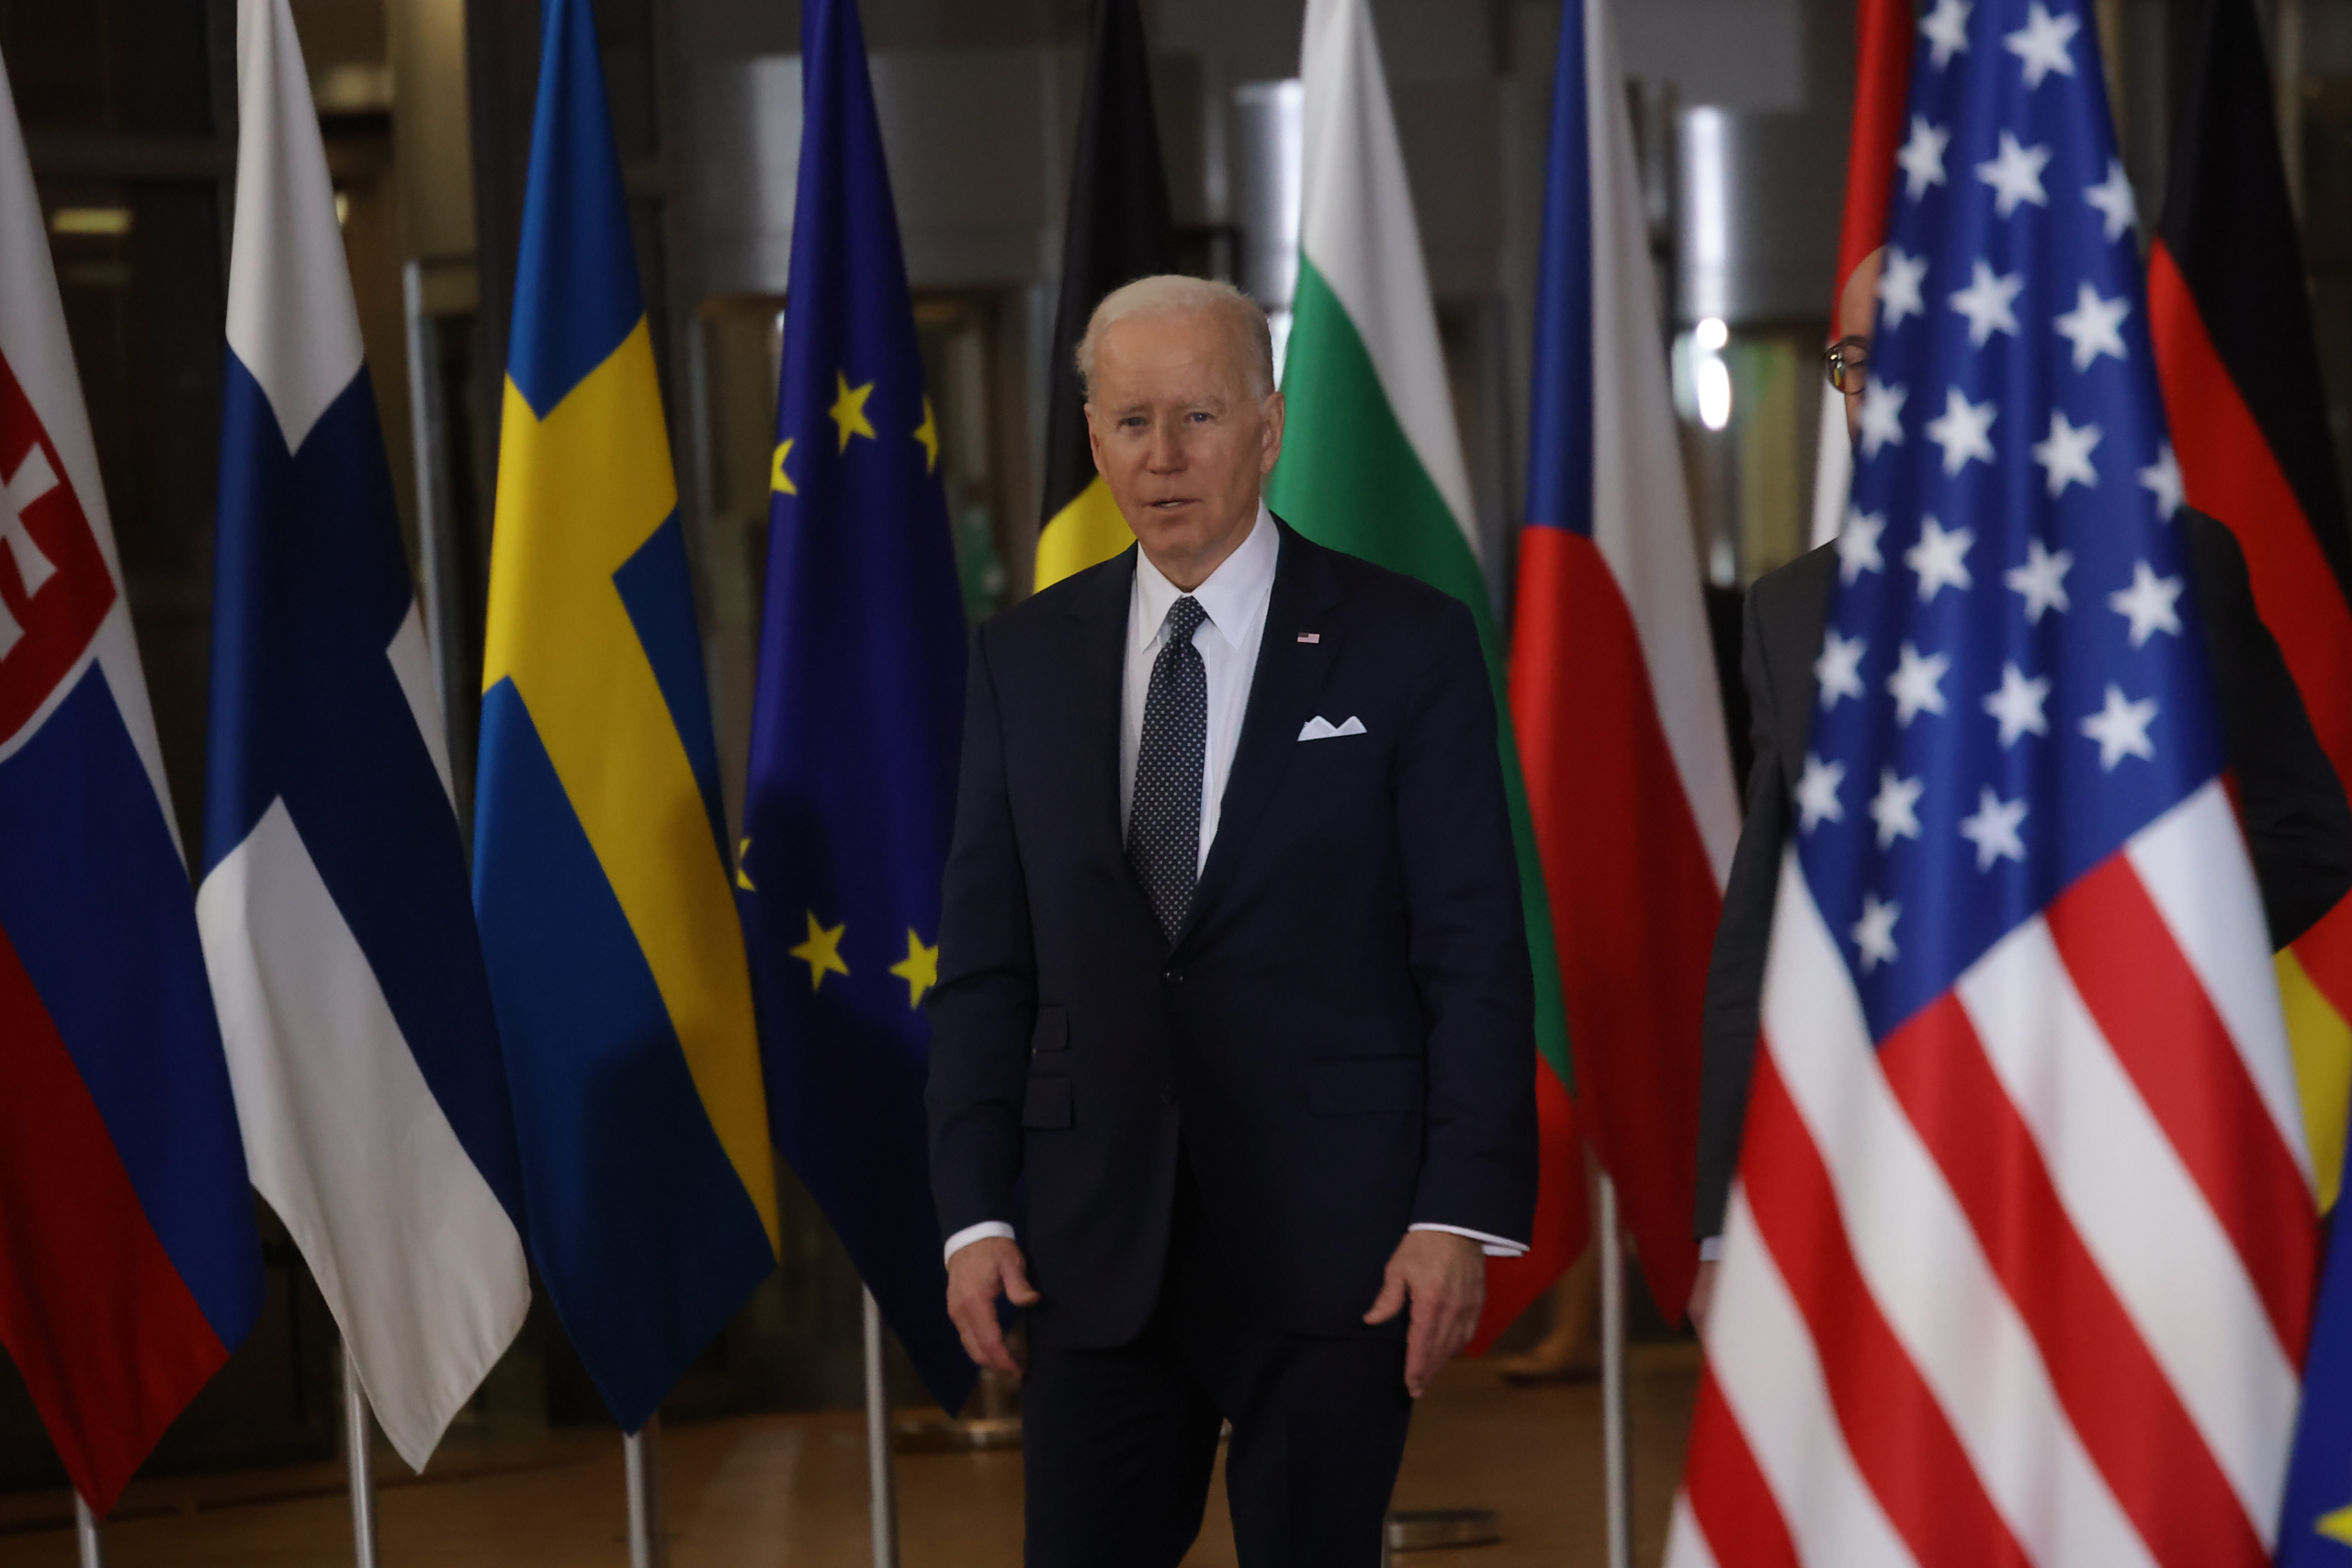 Biden on Ukraine: No News as NATO Briefing Goes Off the Rails